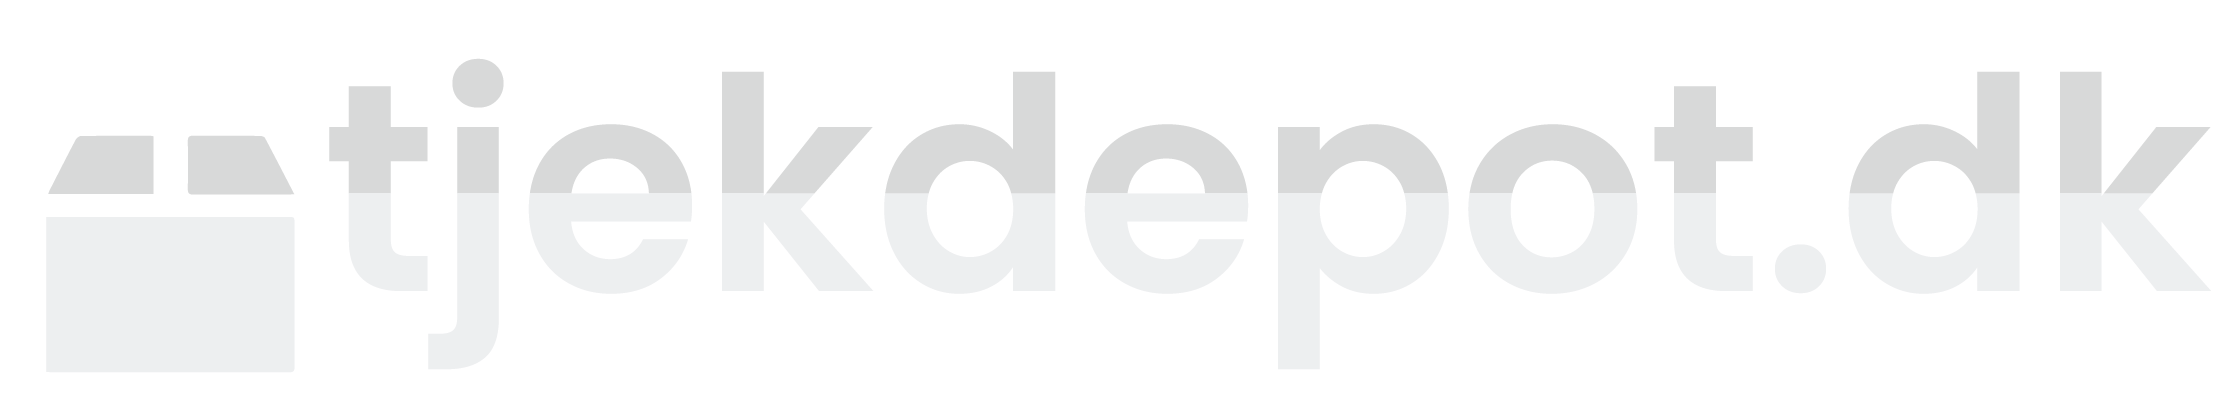 Tjekdepot.dk logo